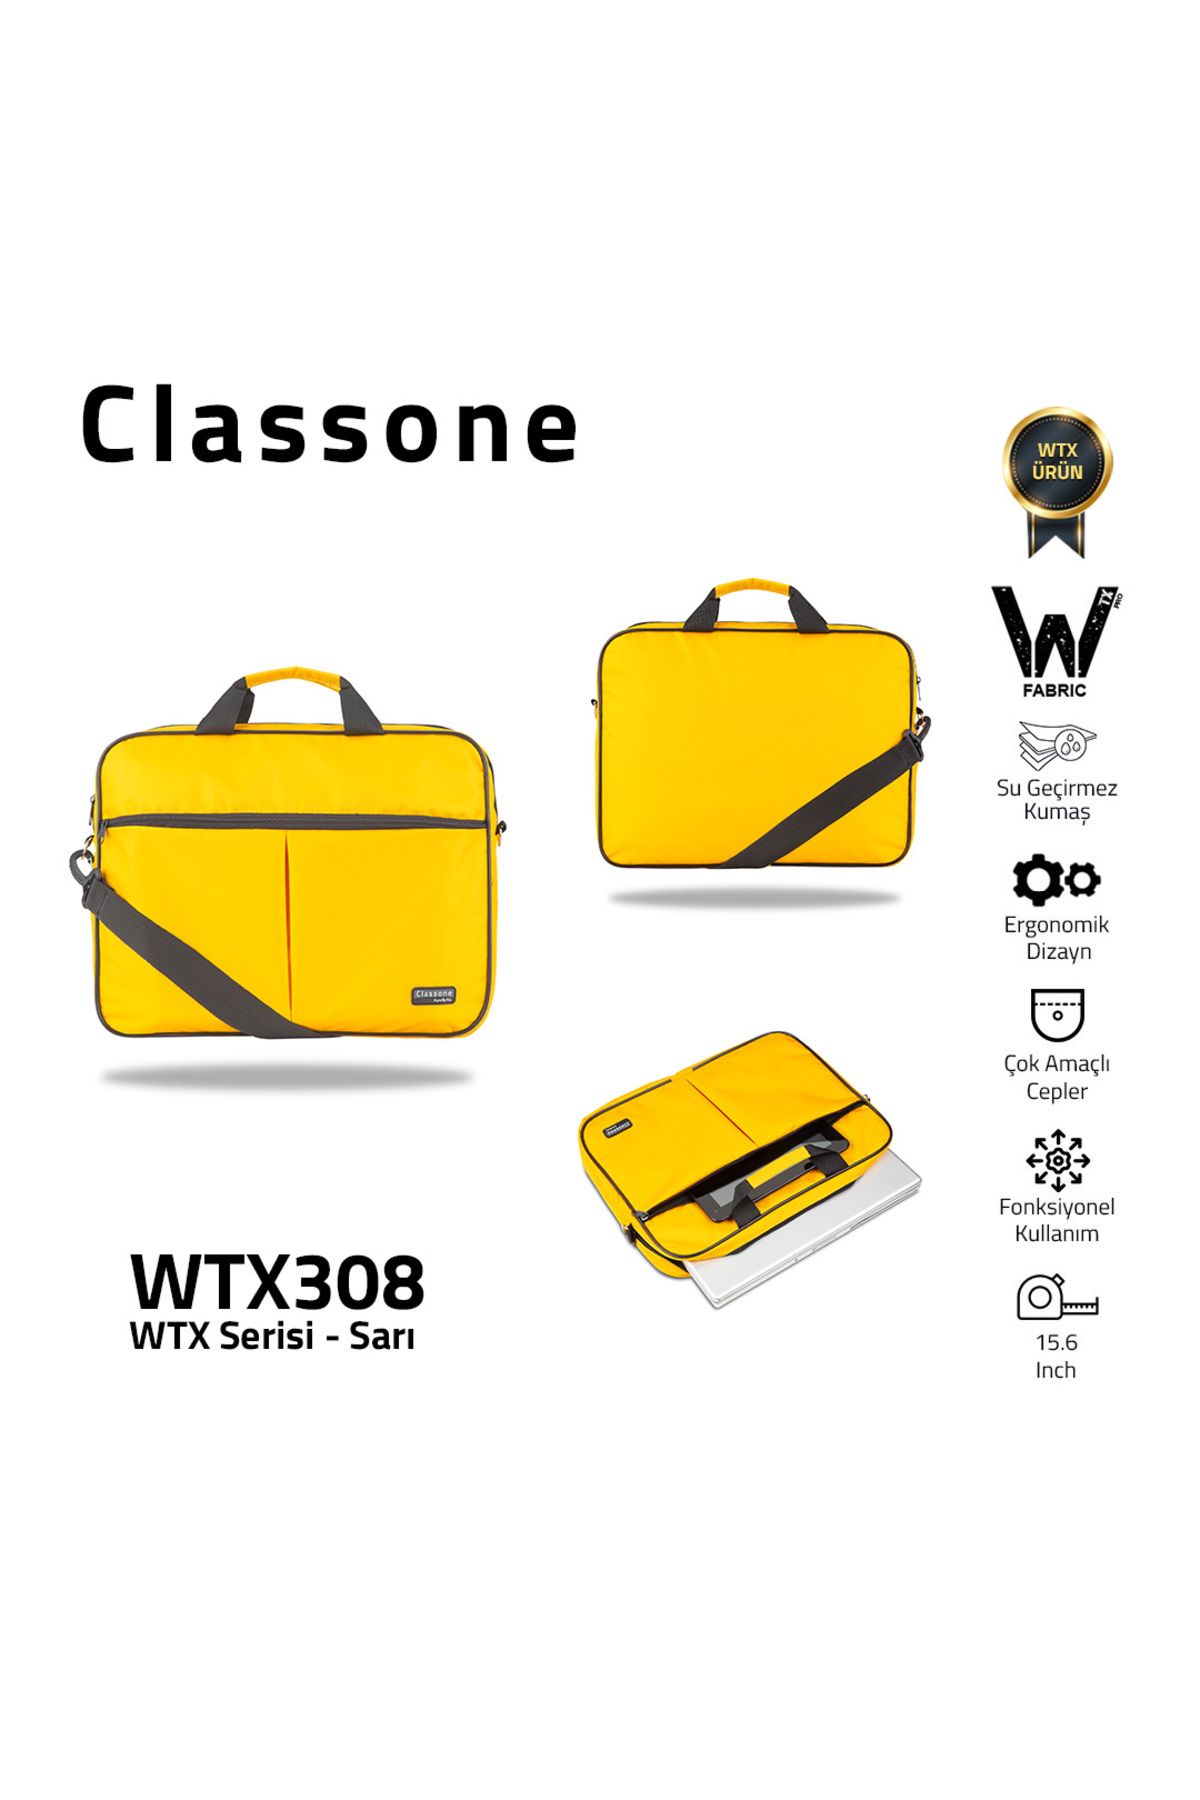 Classone Wtx308 Wtxpro serisi 15.6 Inch Uyumlu Su Geçirmez Kumaş Macbook, Laptop , Notebook El Çantası